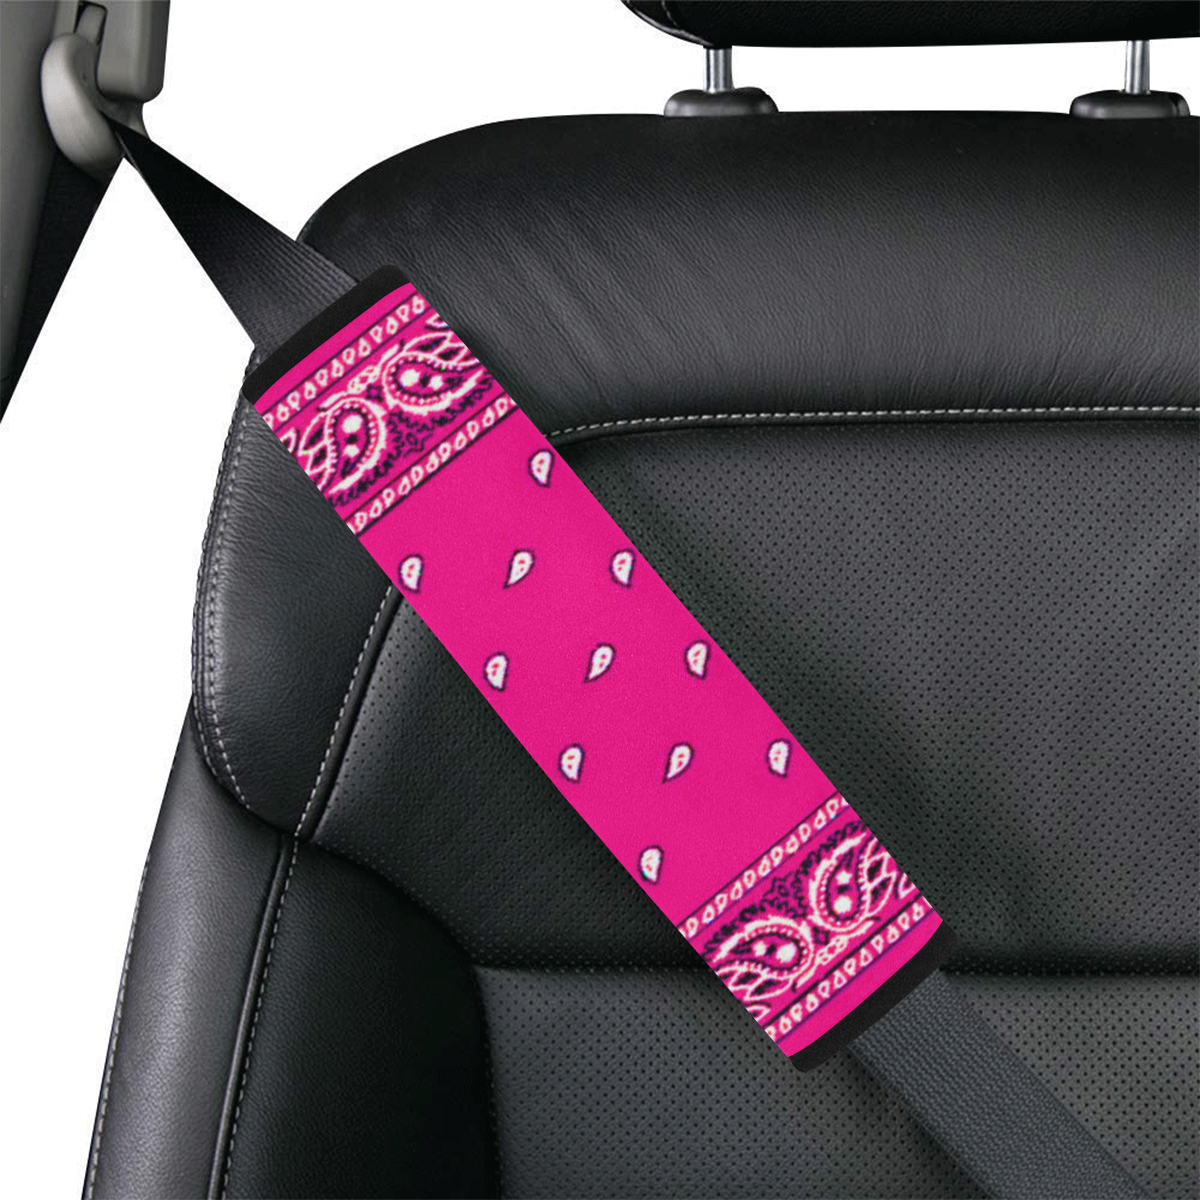 KERCHIEF PATTERN PINK Car Seat Belt Cover 7''x12.6''